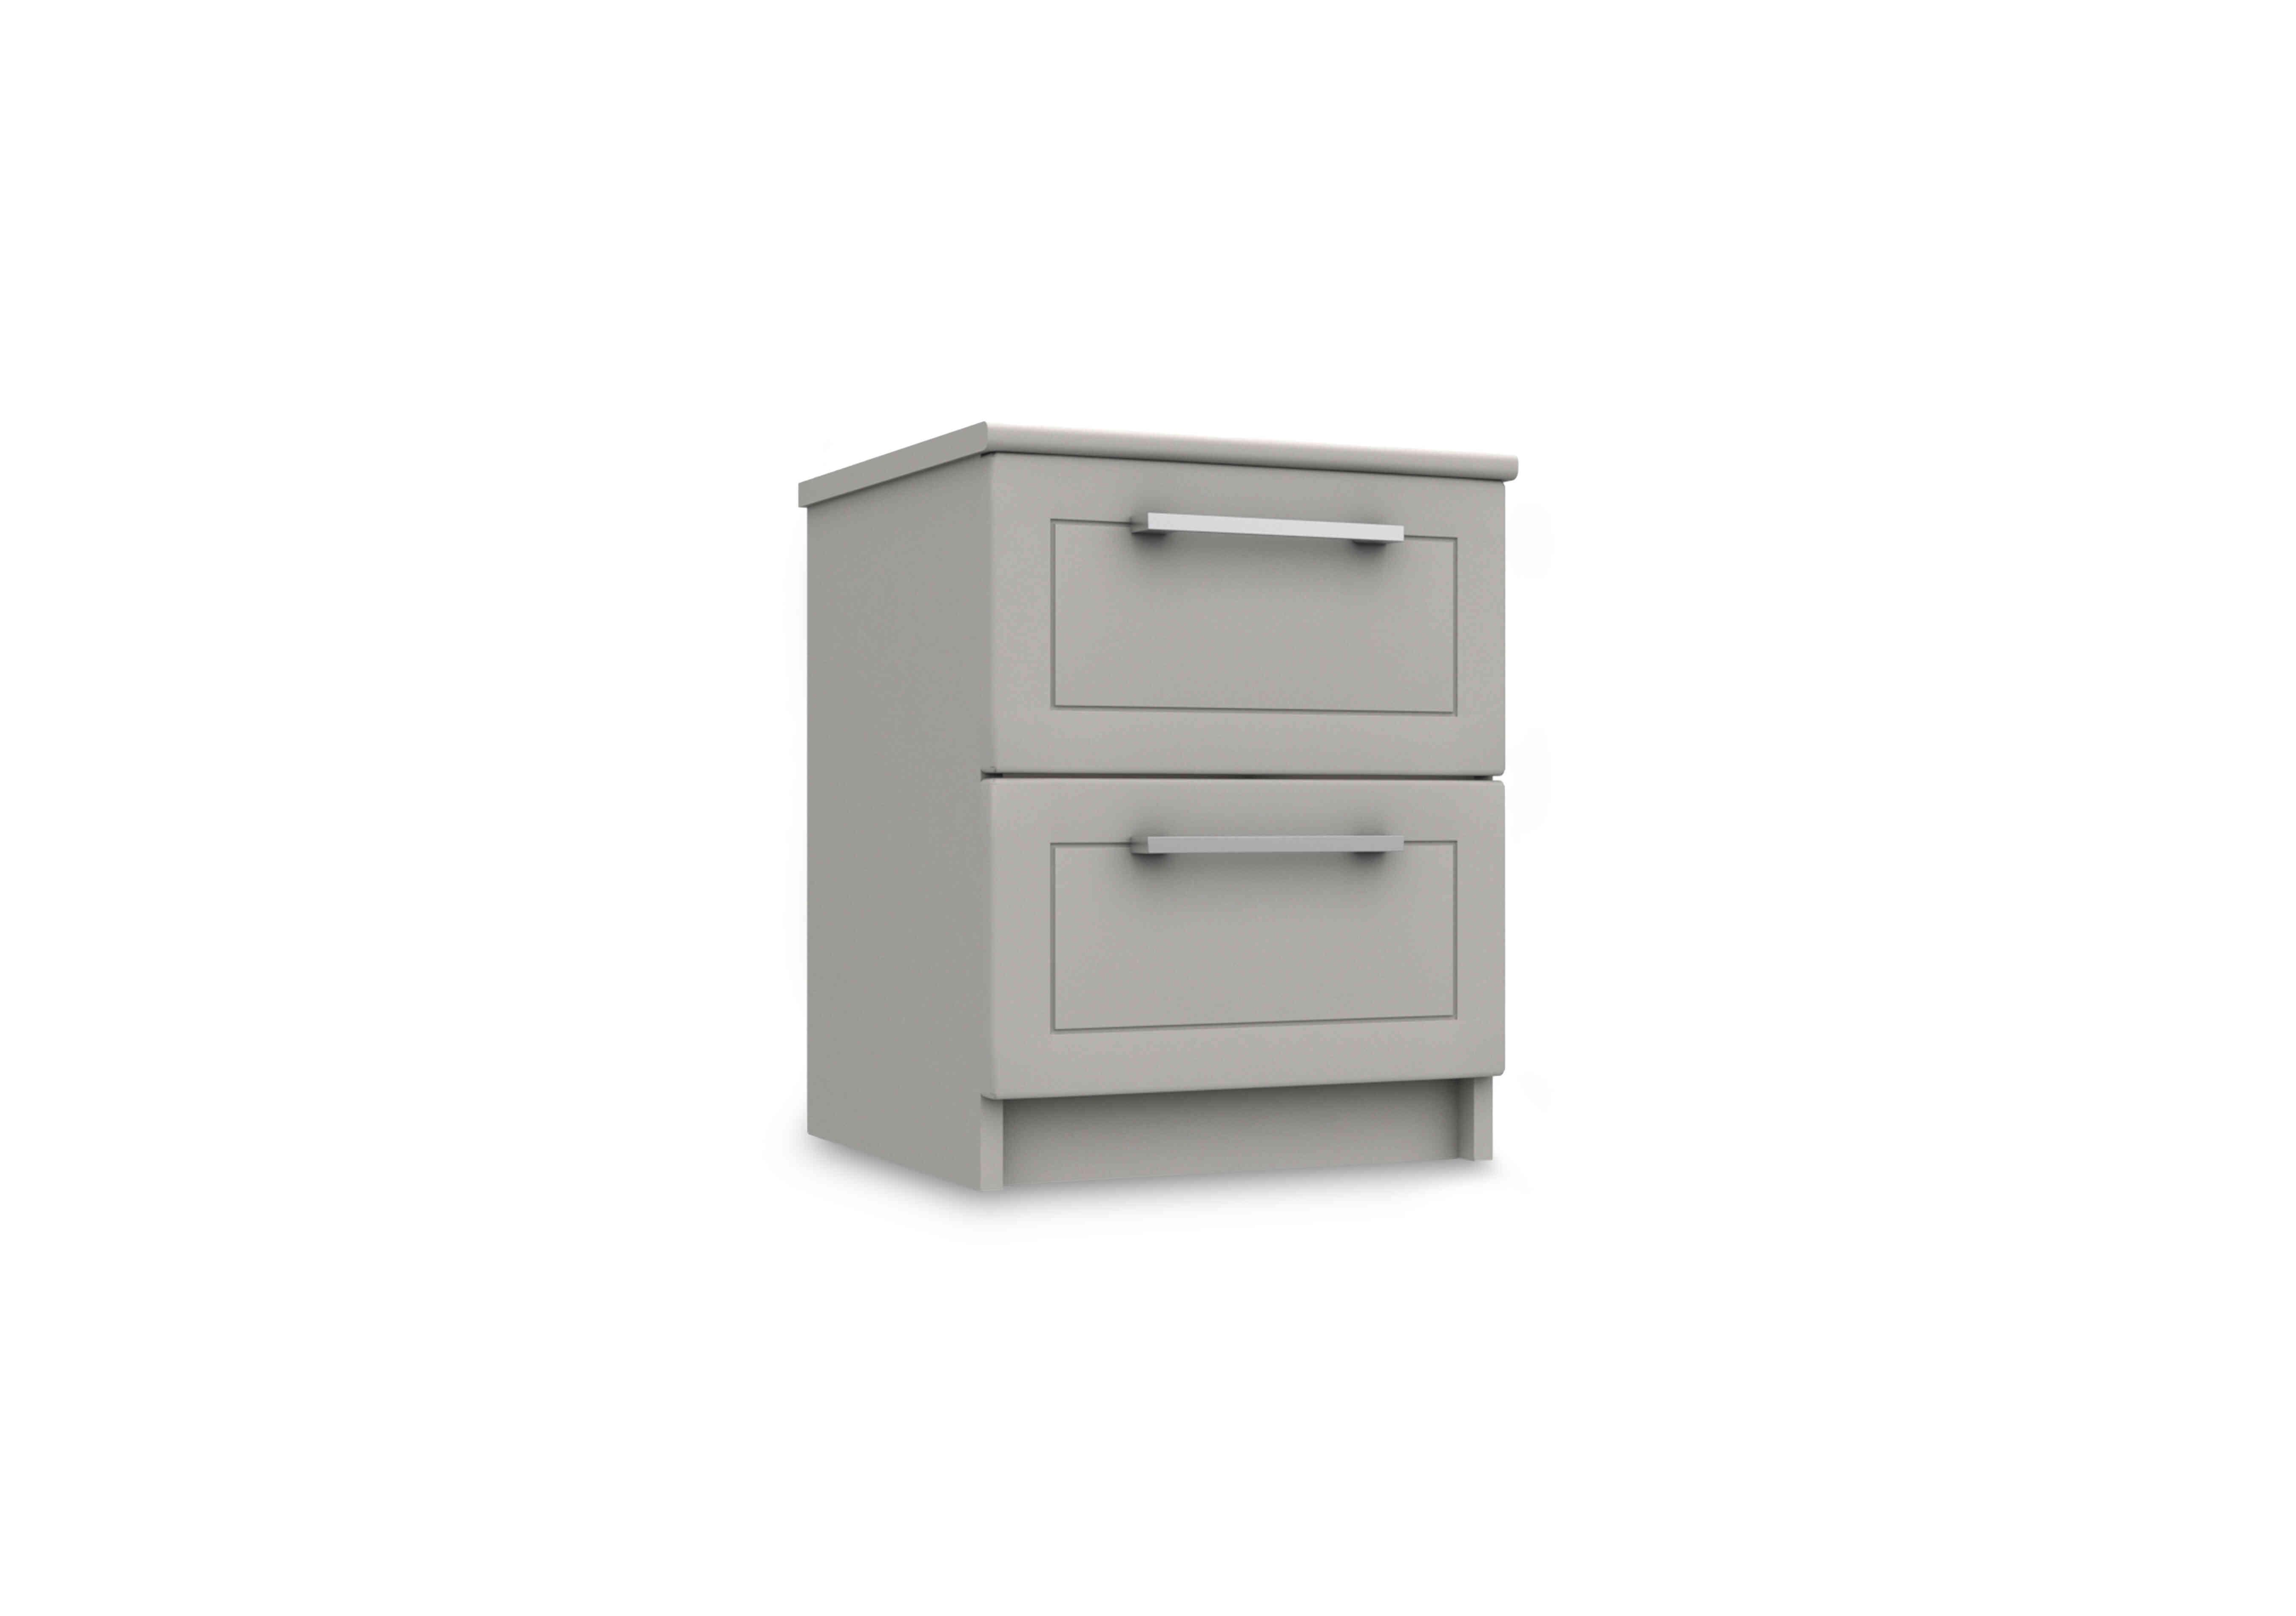 Bexley 2 Drawer Bedside Cabinet in Light Grey Gloss on Furniture Village